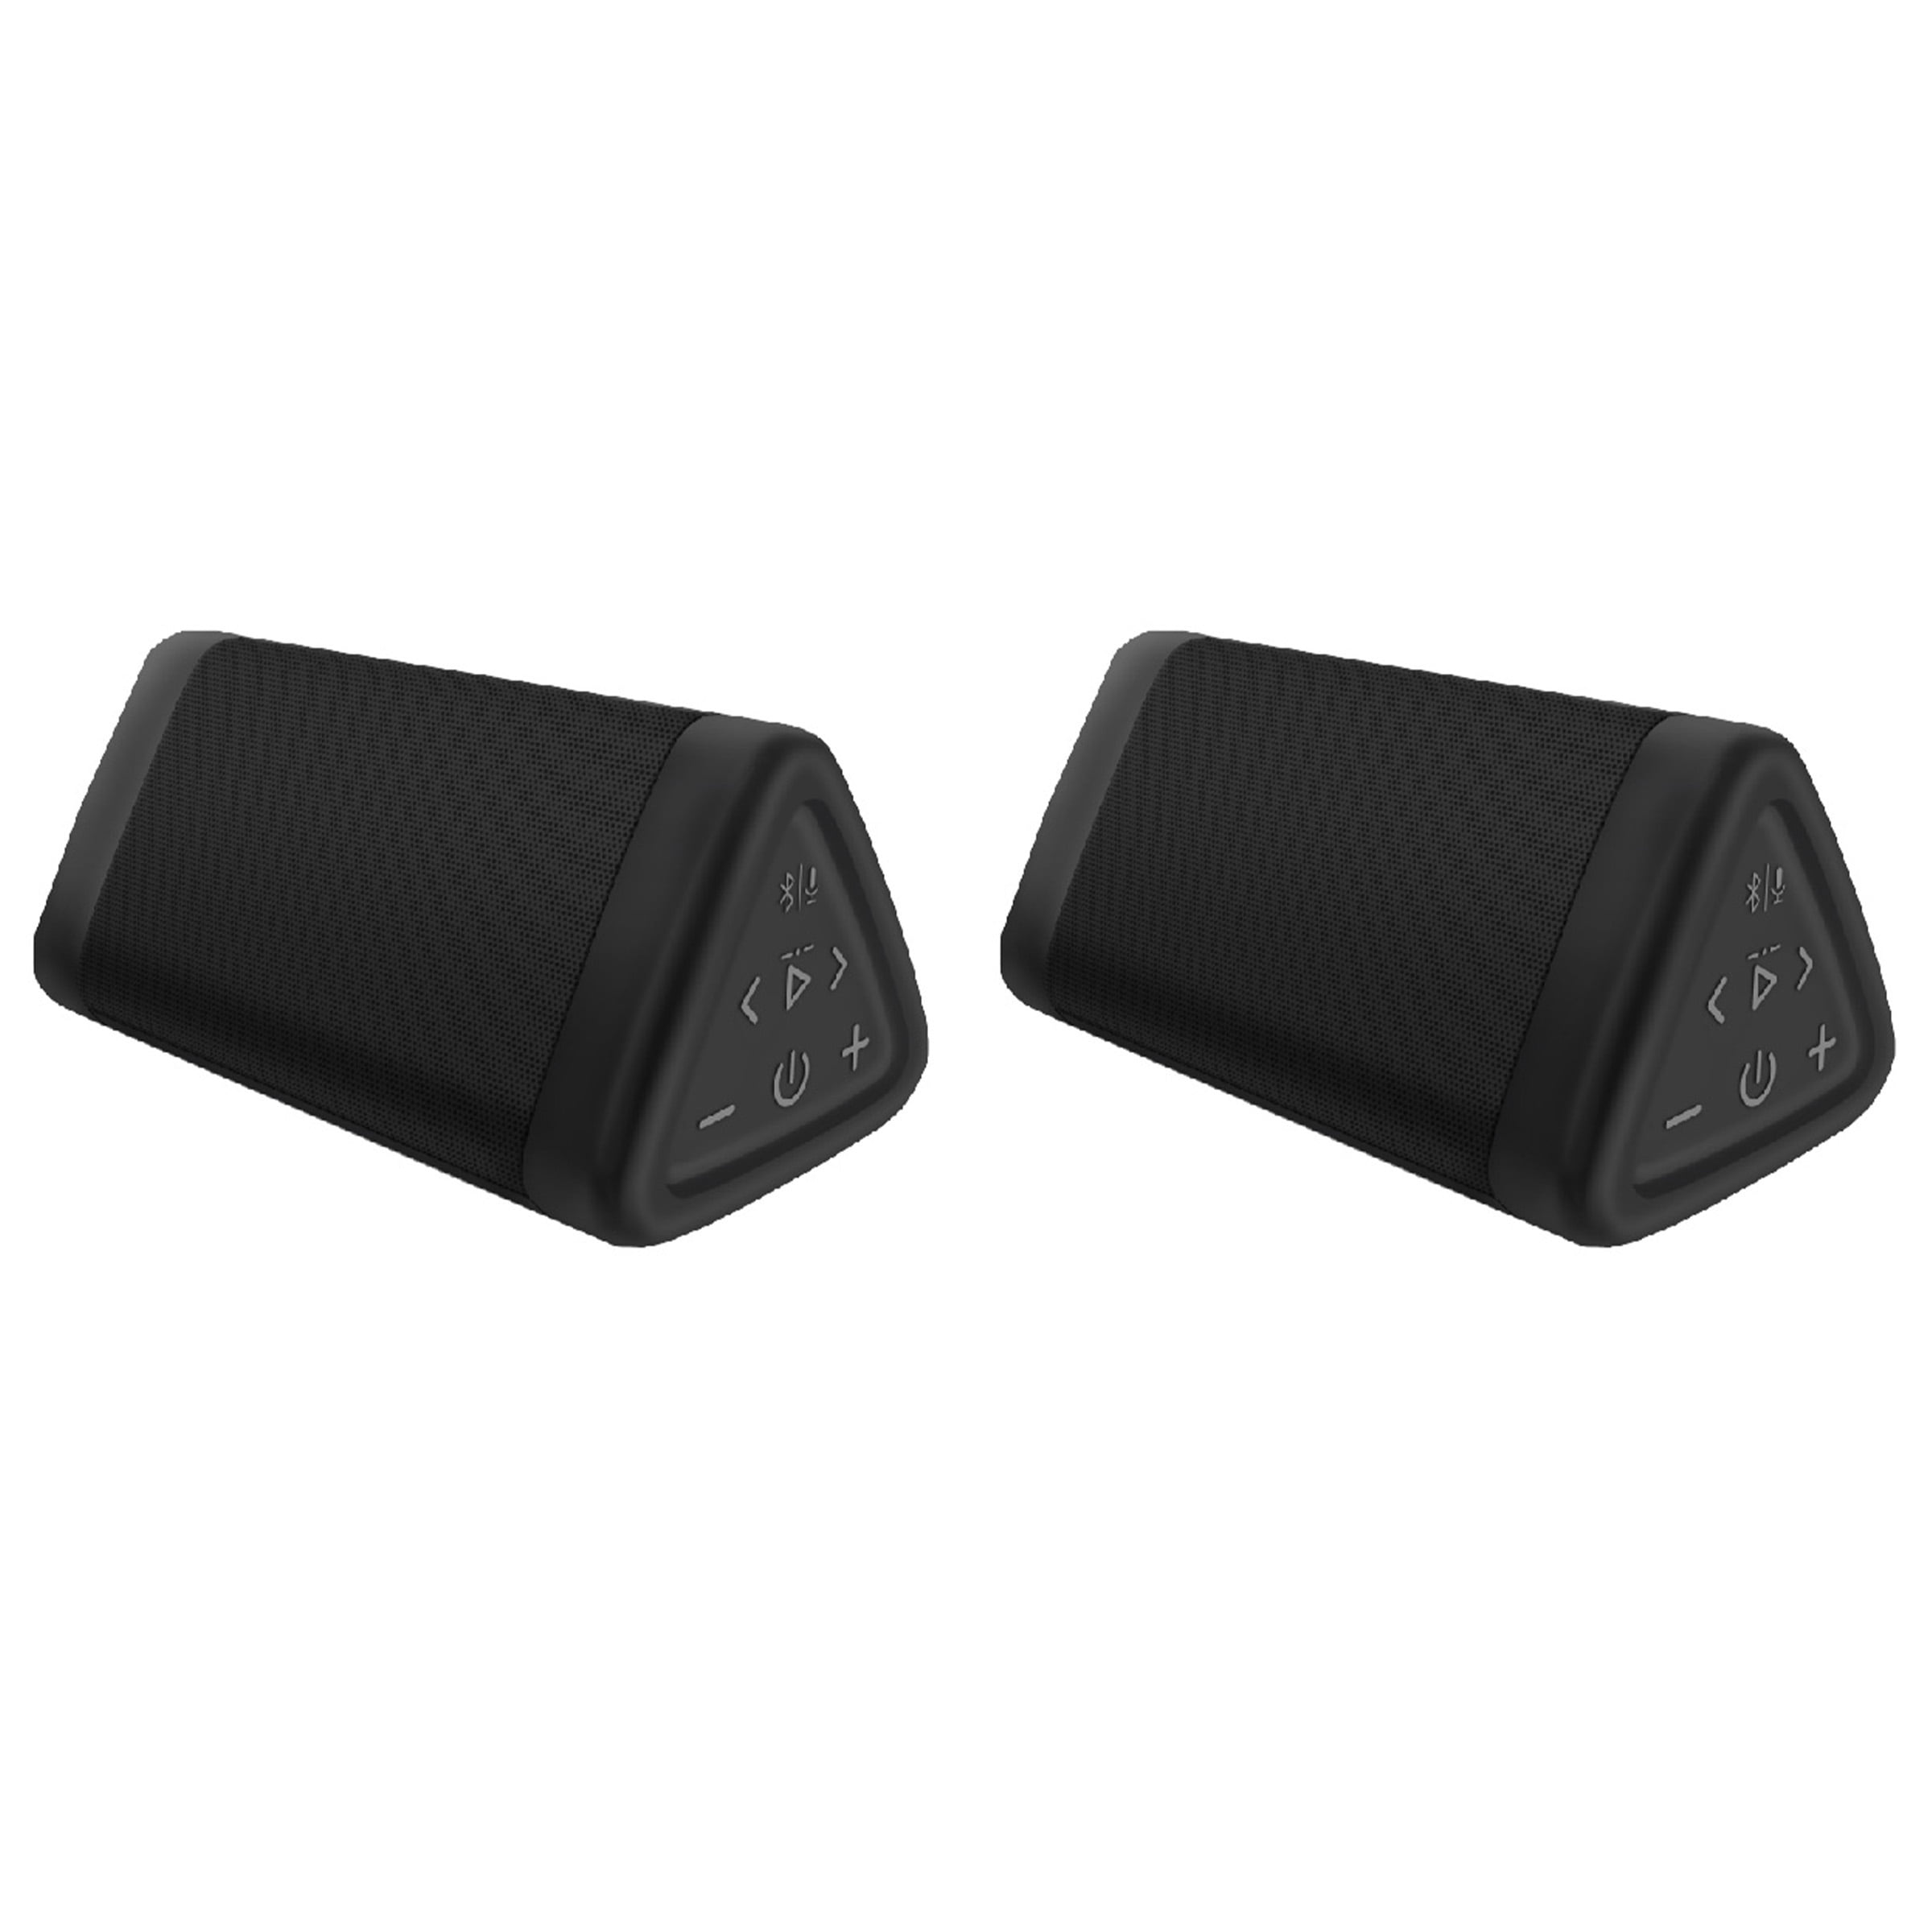 OontZ Angle 3S DUAL Portable Bluetooth Speakers, Enhanced